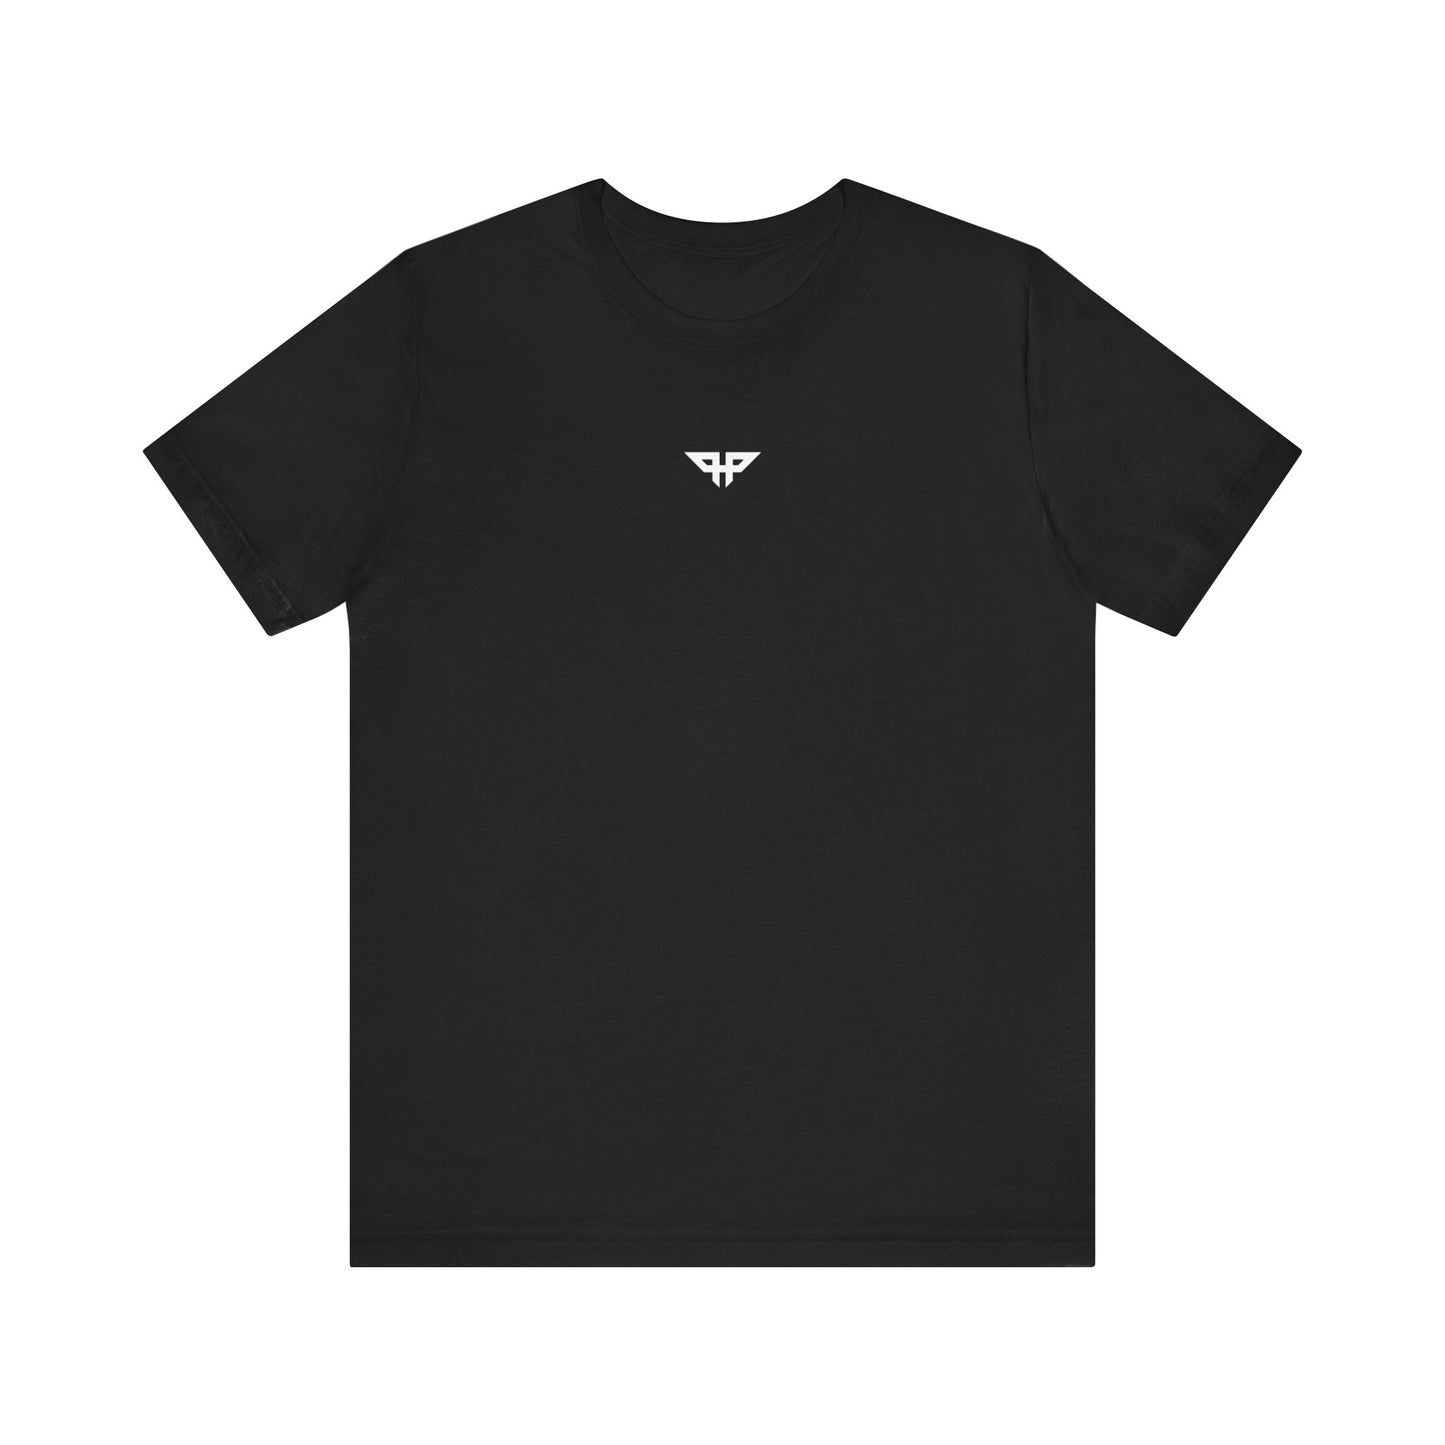 Self Love T-shirt (Black)